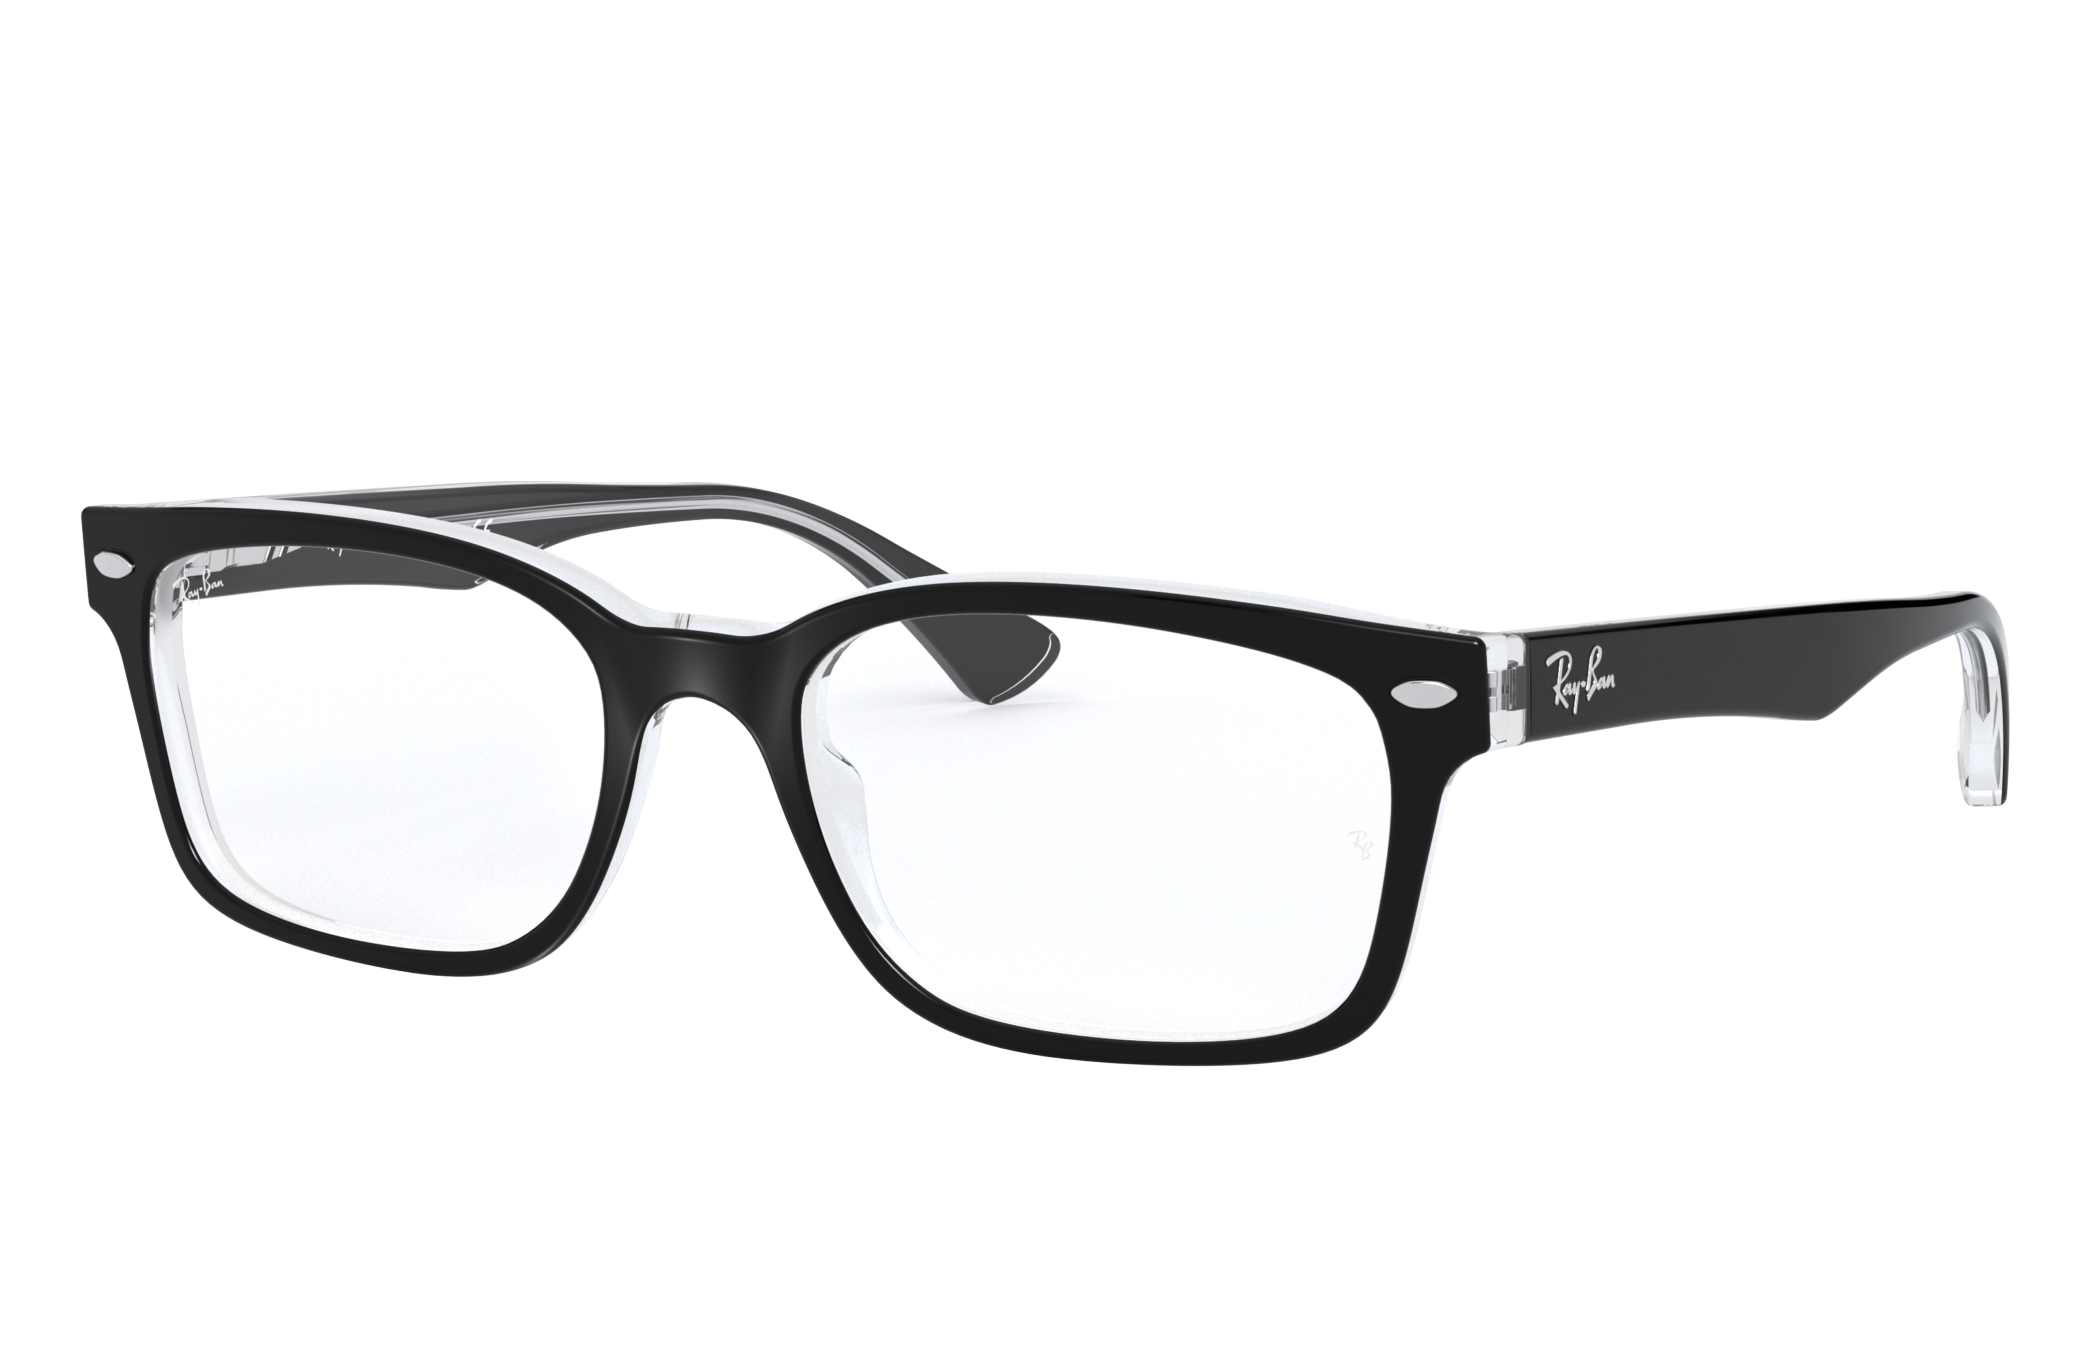 Rb5286 Optics Eyeglasses with Black On Transparent Frame Ray-Ban®